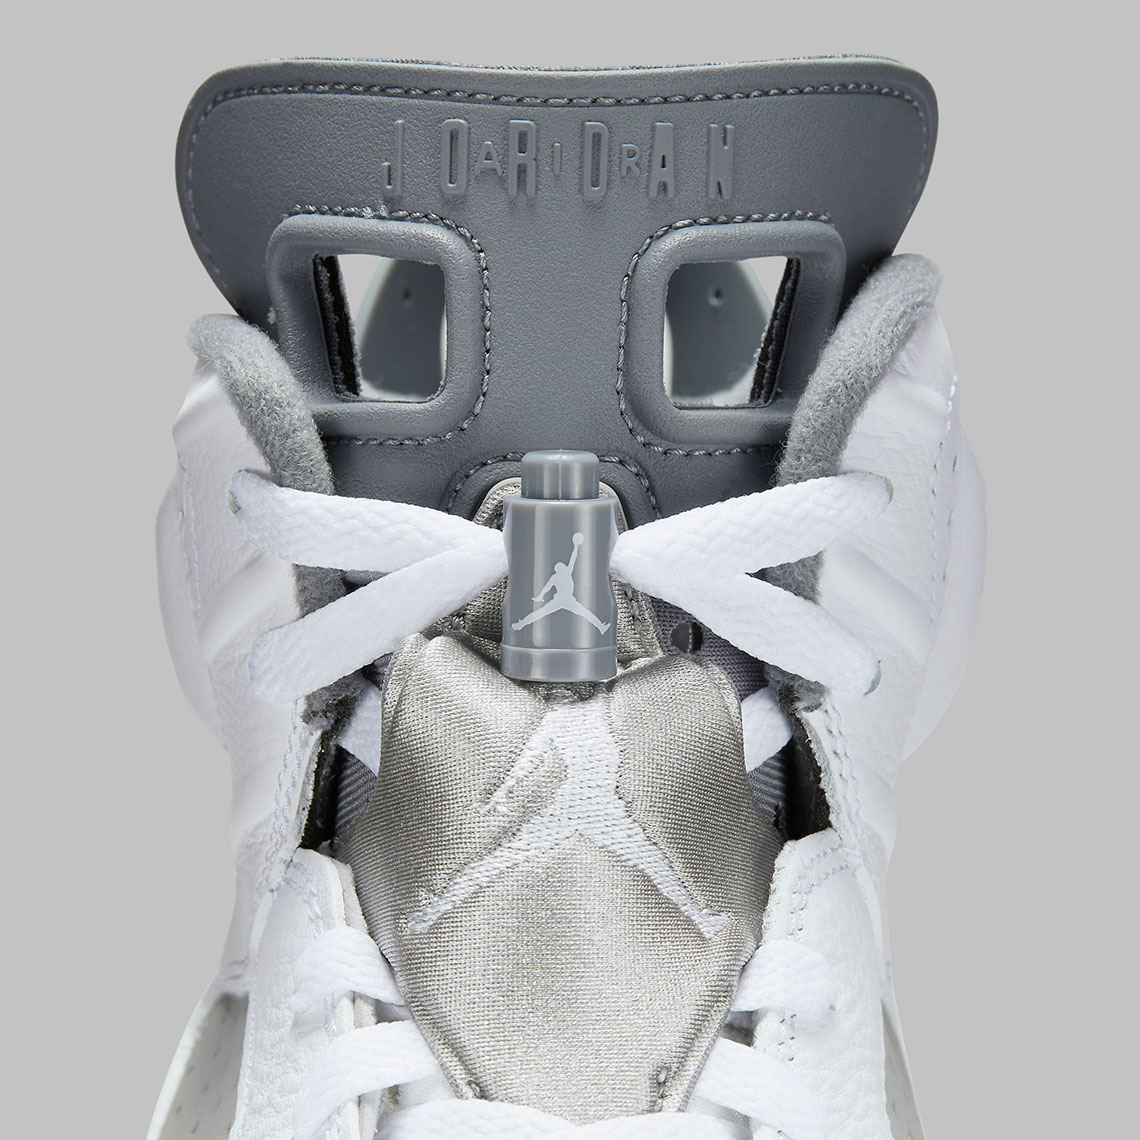 Air Jordan 6 Black Metallic Silver Releasing Holiday 2022 - Sneaker News